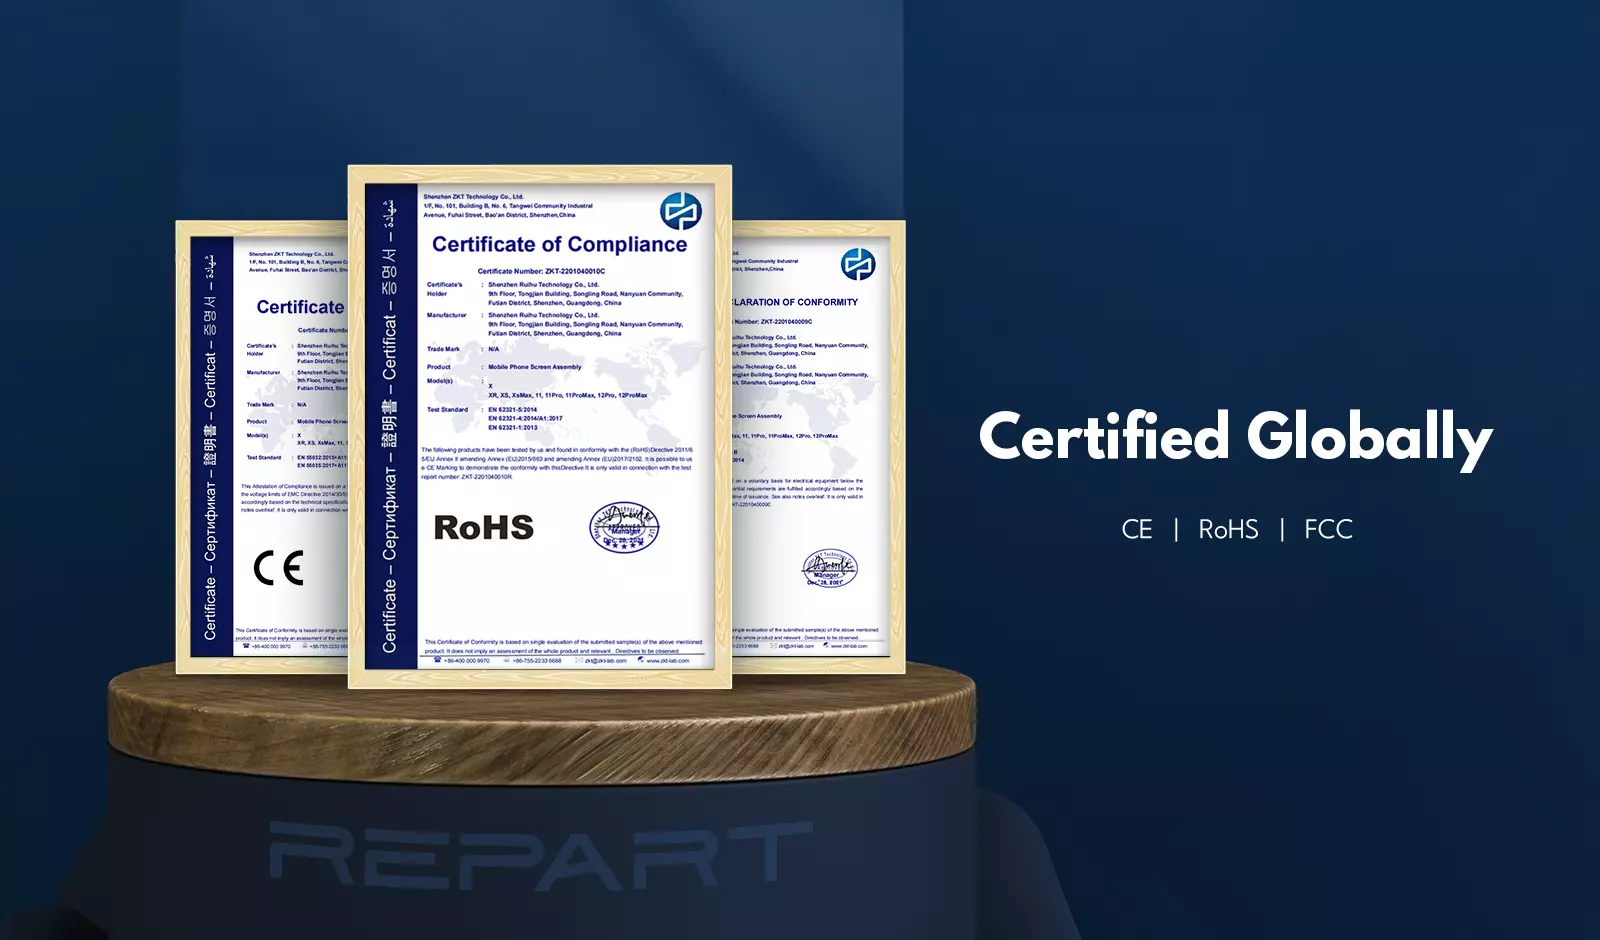 REPART Hard OLED Screen Certified Globally